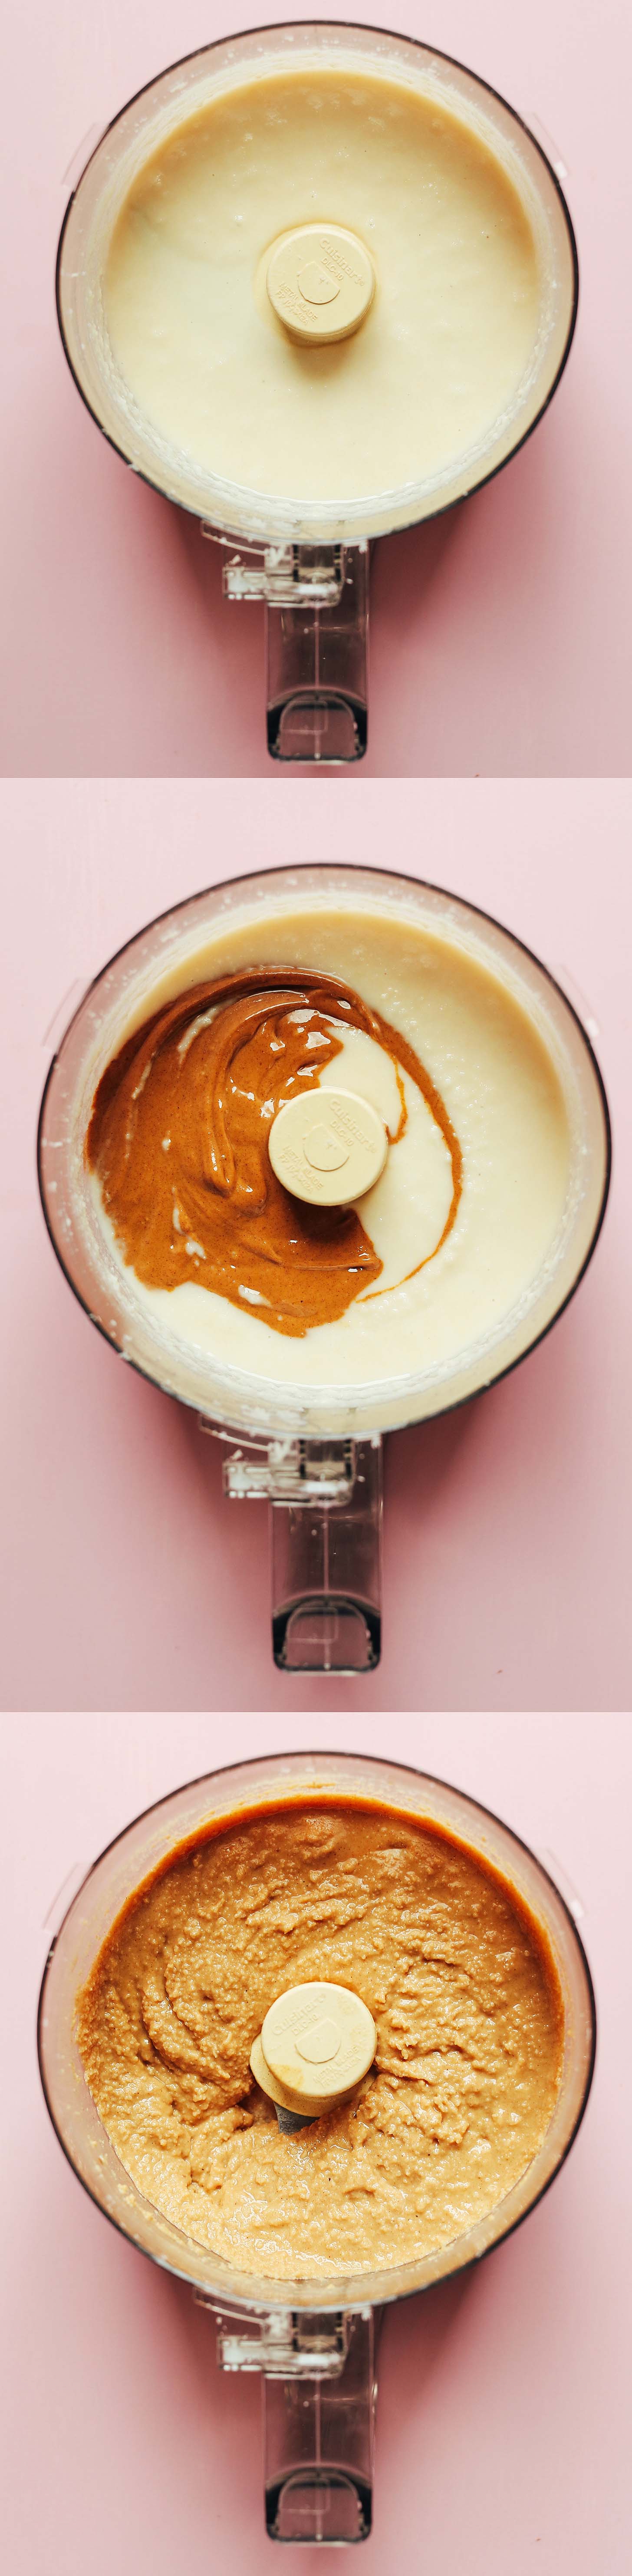 Food processor with vegan gluten-free Peanut Butter Fudge batter